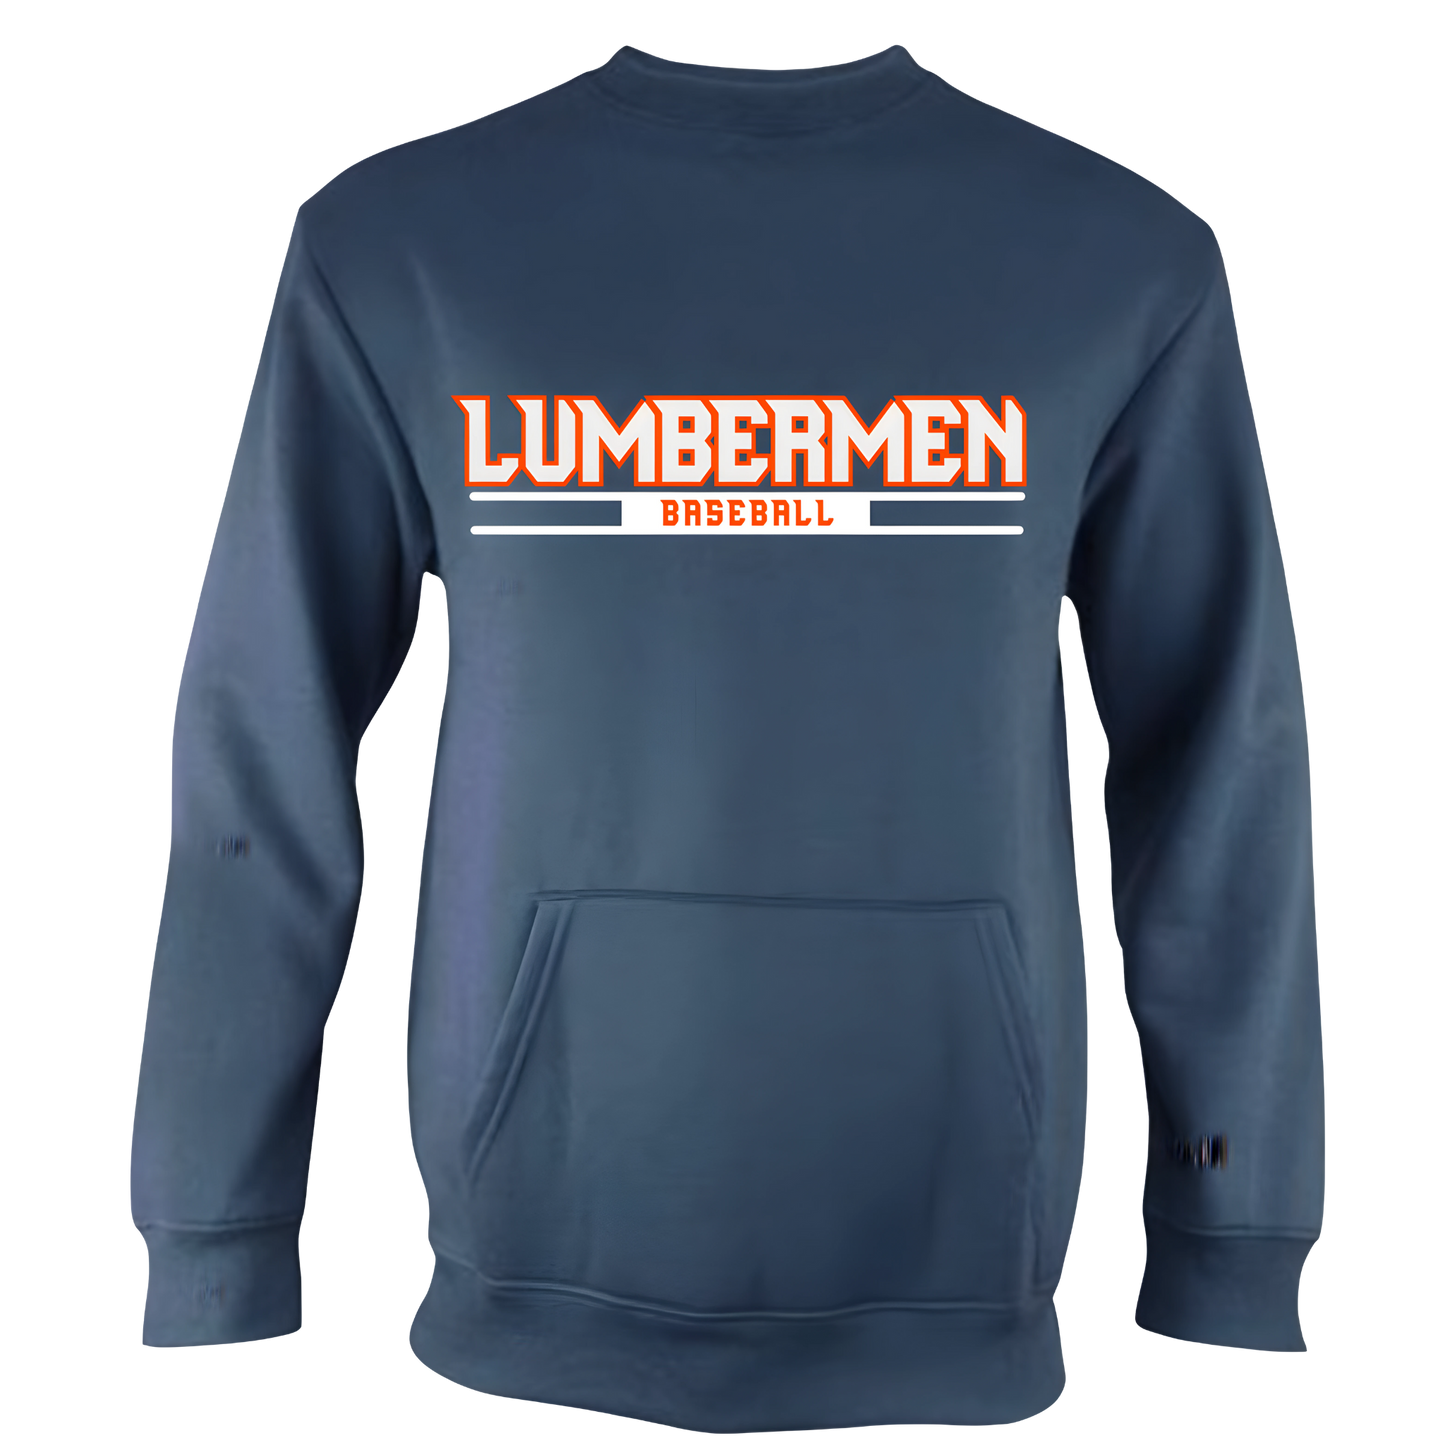 Youth Lumbermen Pocket Crewneck